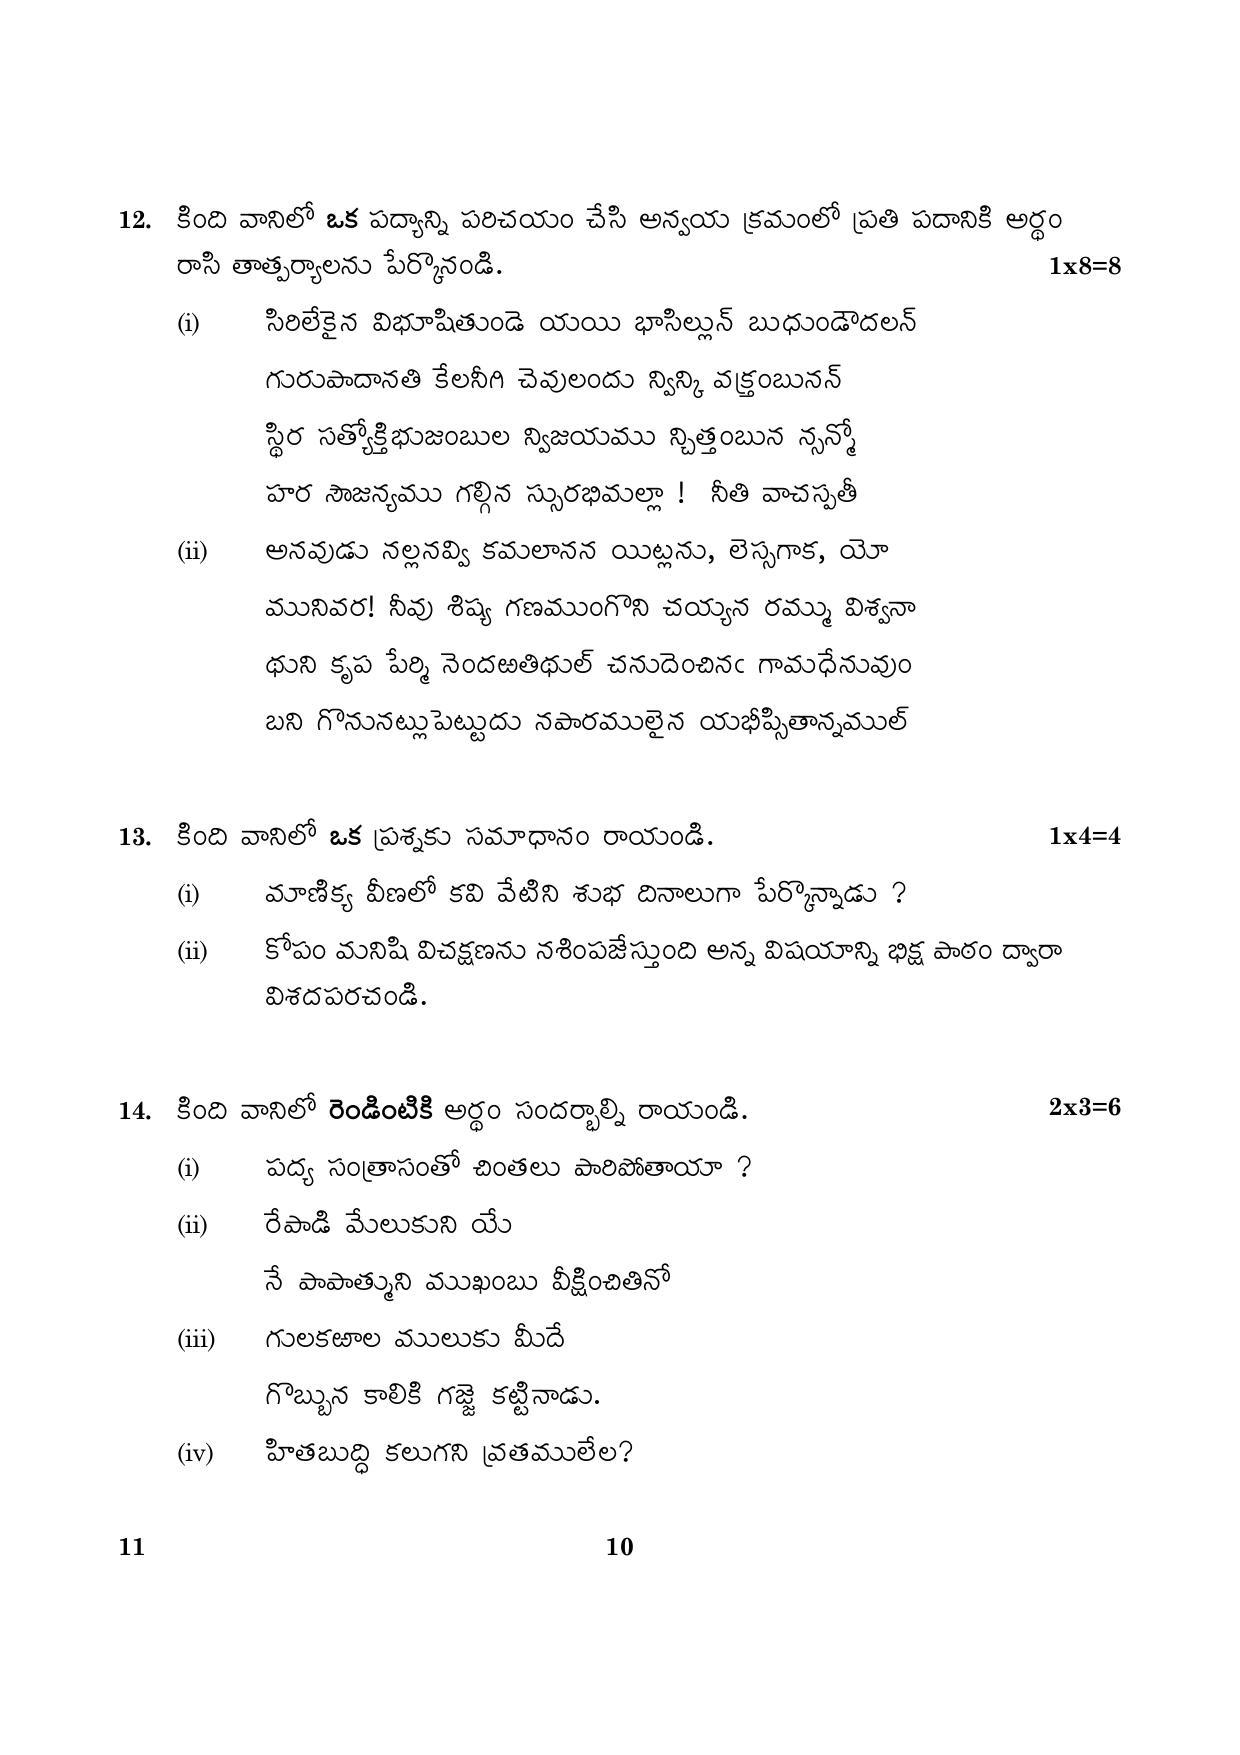 CBSE Class 10 011 Telugu 2016 Question Paper - Page 10